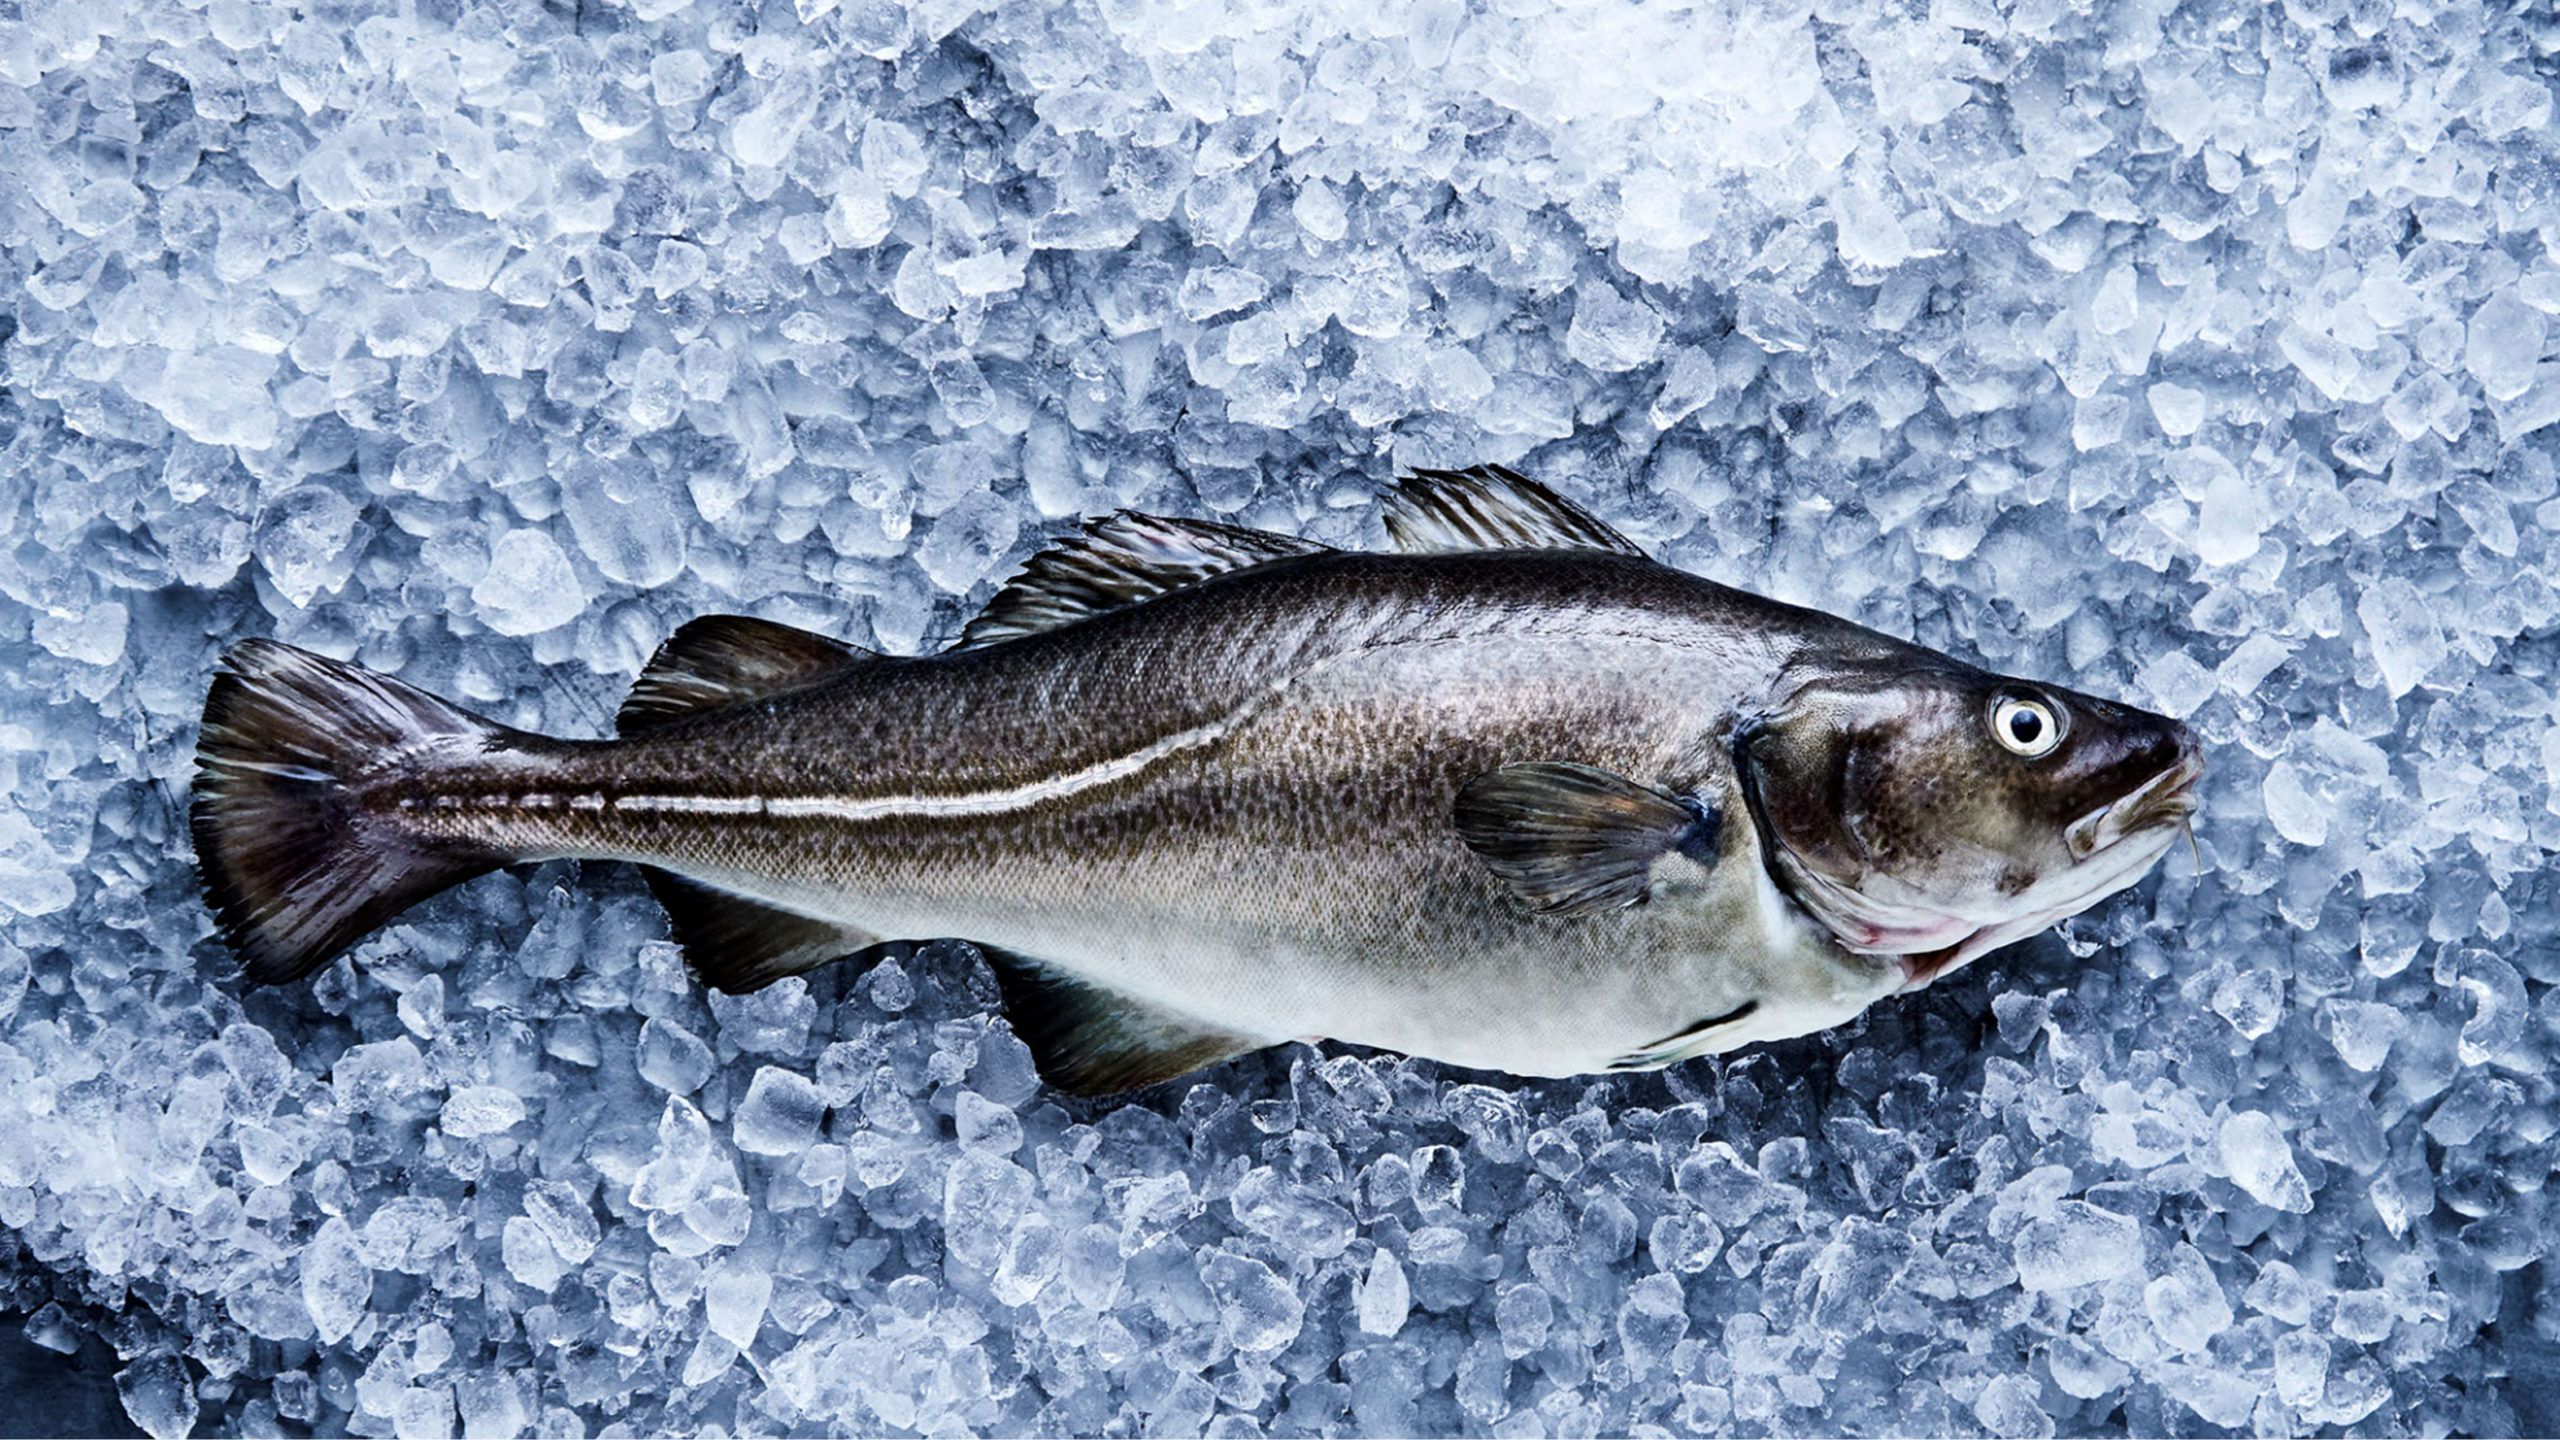 Cod on ice. Photo: Norcod